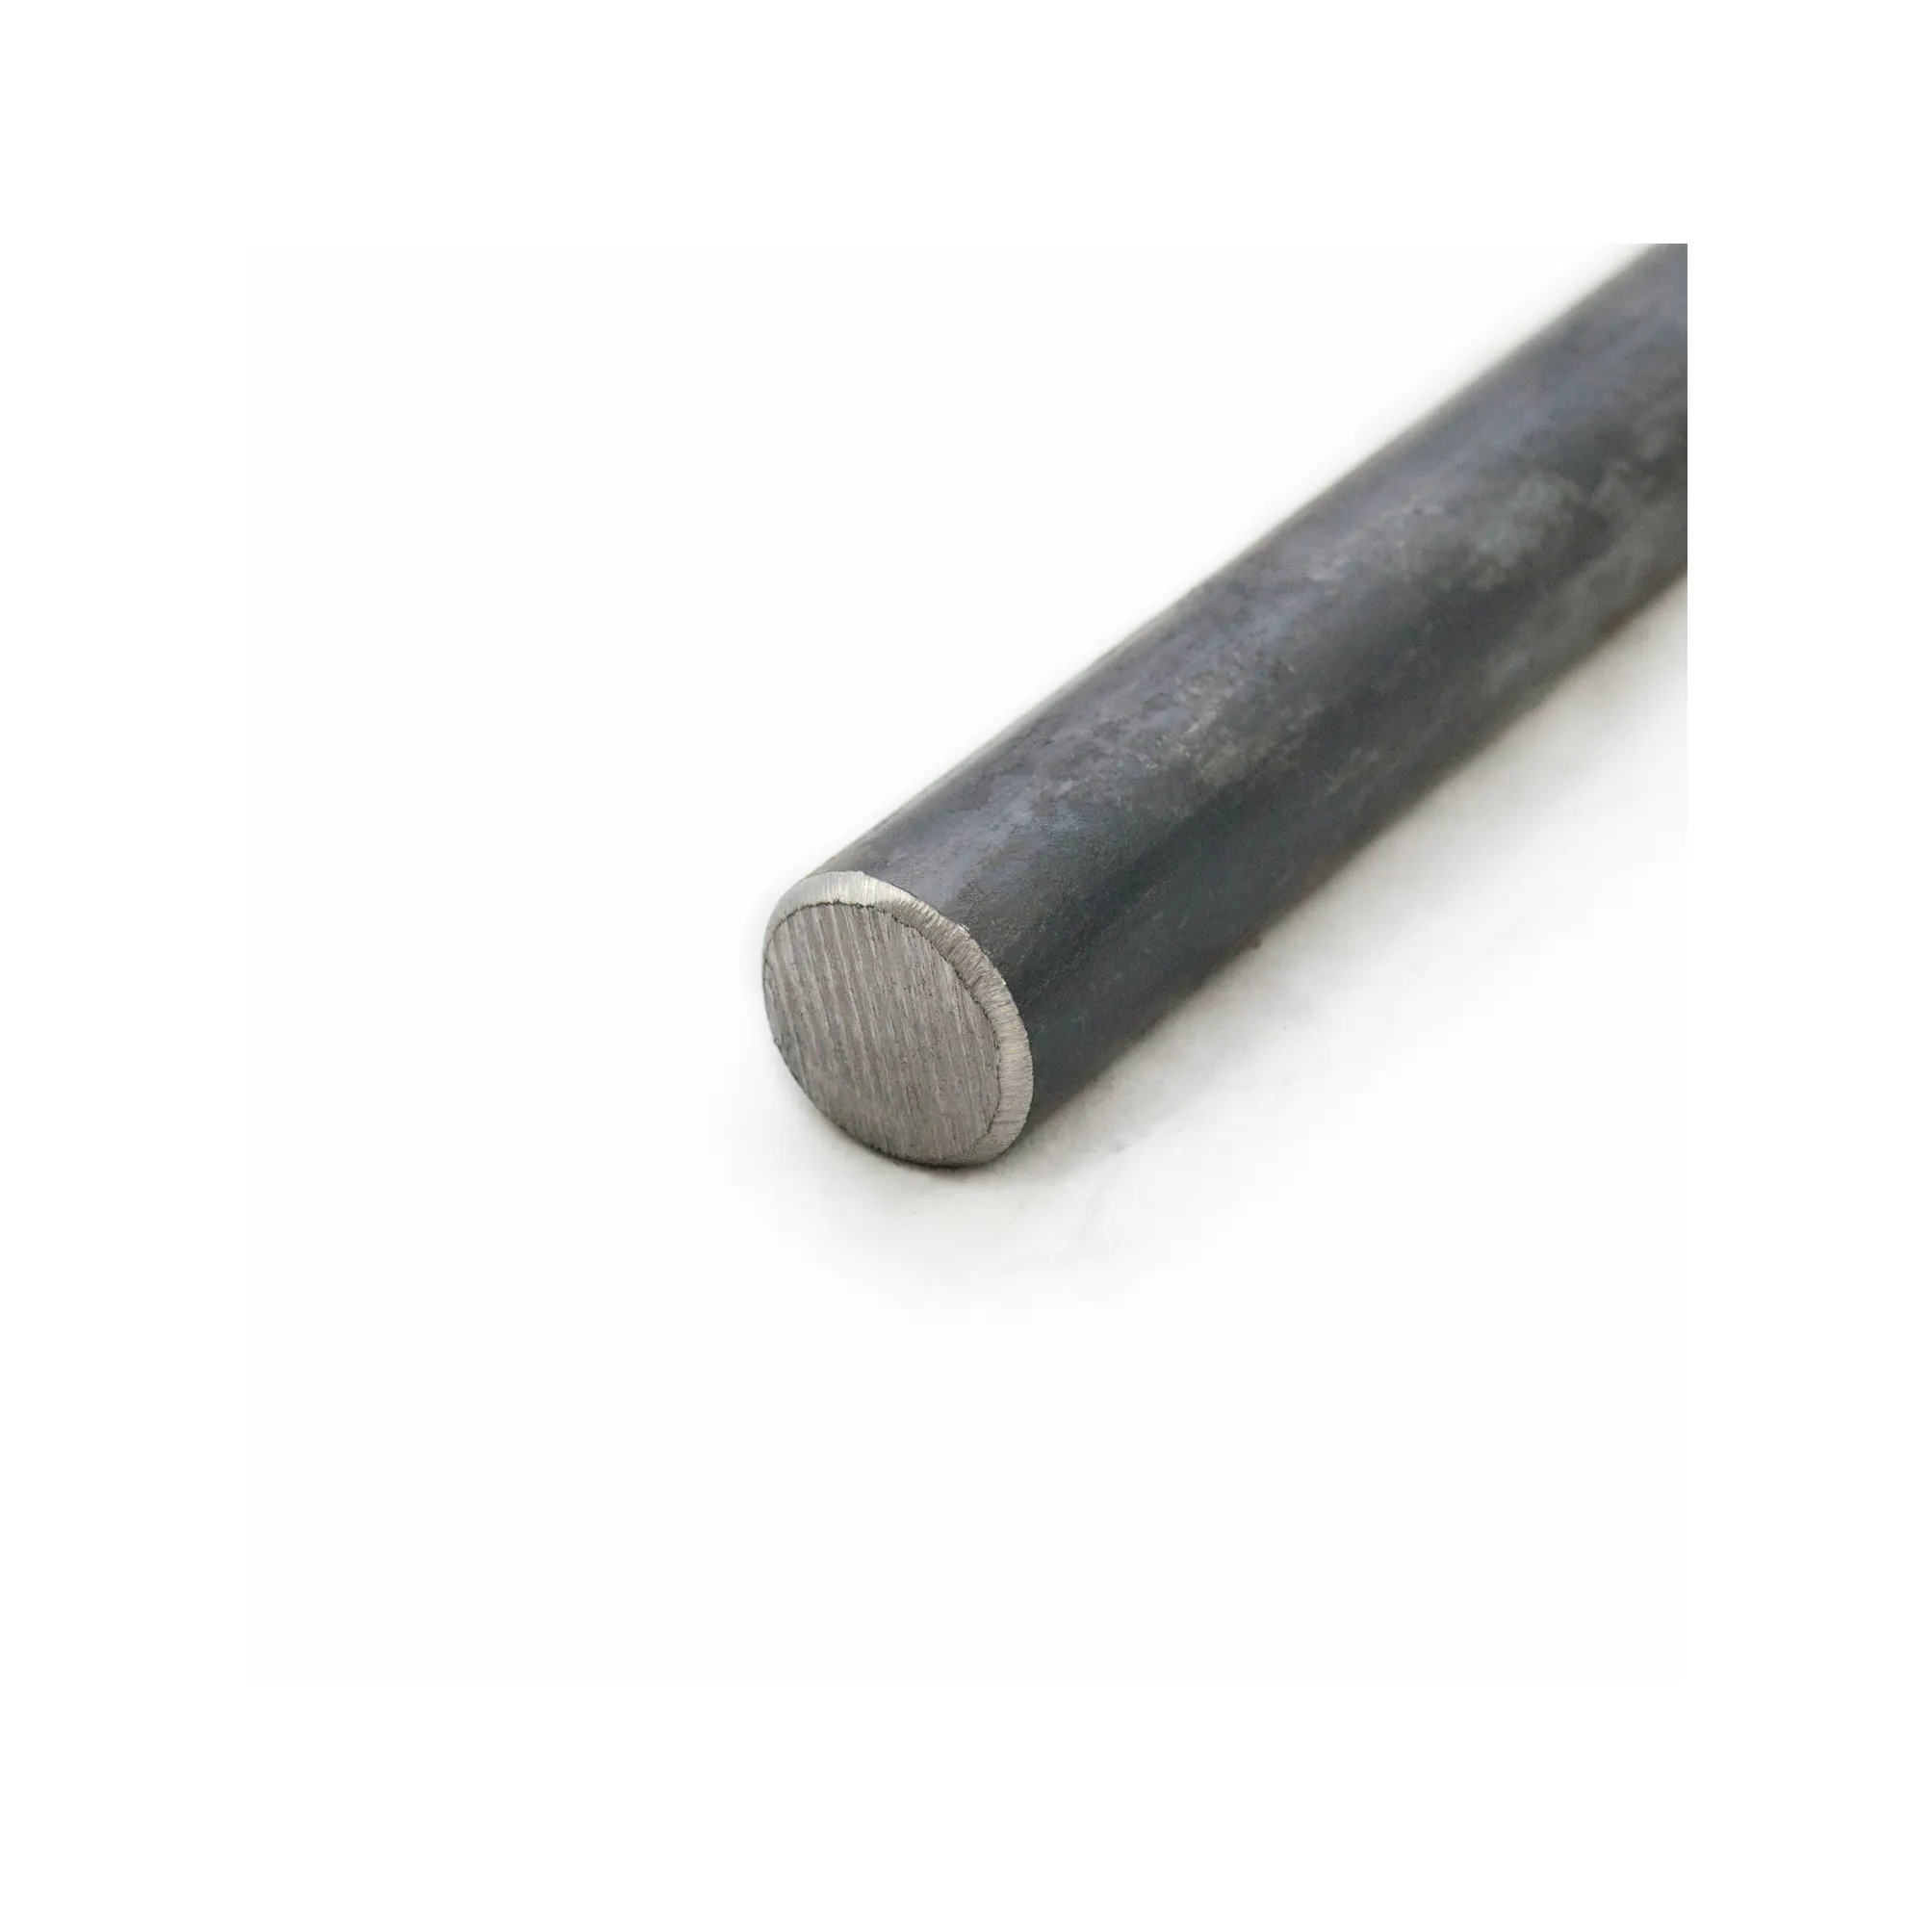 Batang bulat baja tahan karat, berbagai ukuran batang logam baja tahan karat peningkatan kekuatan